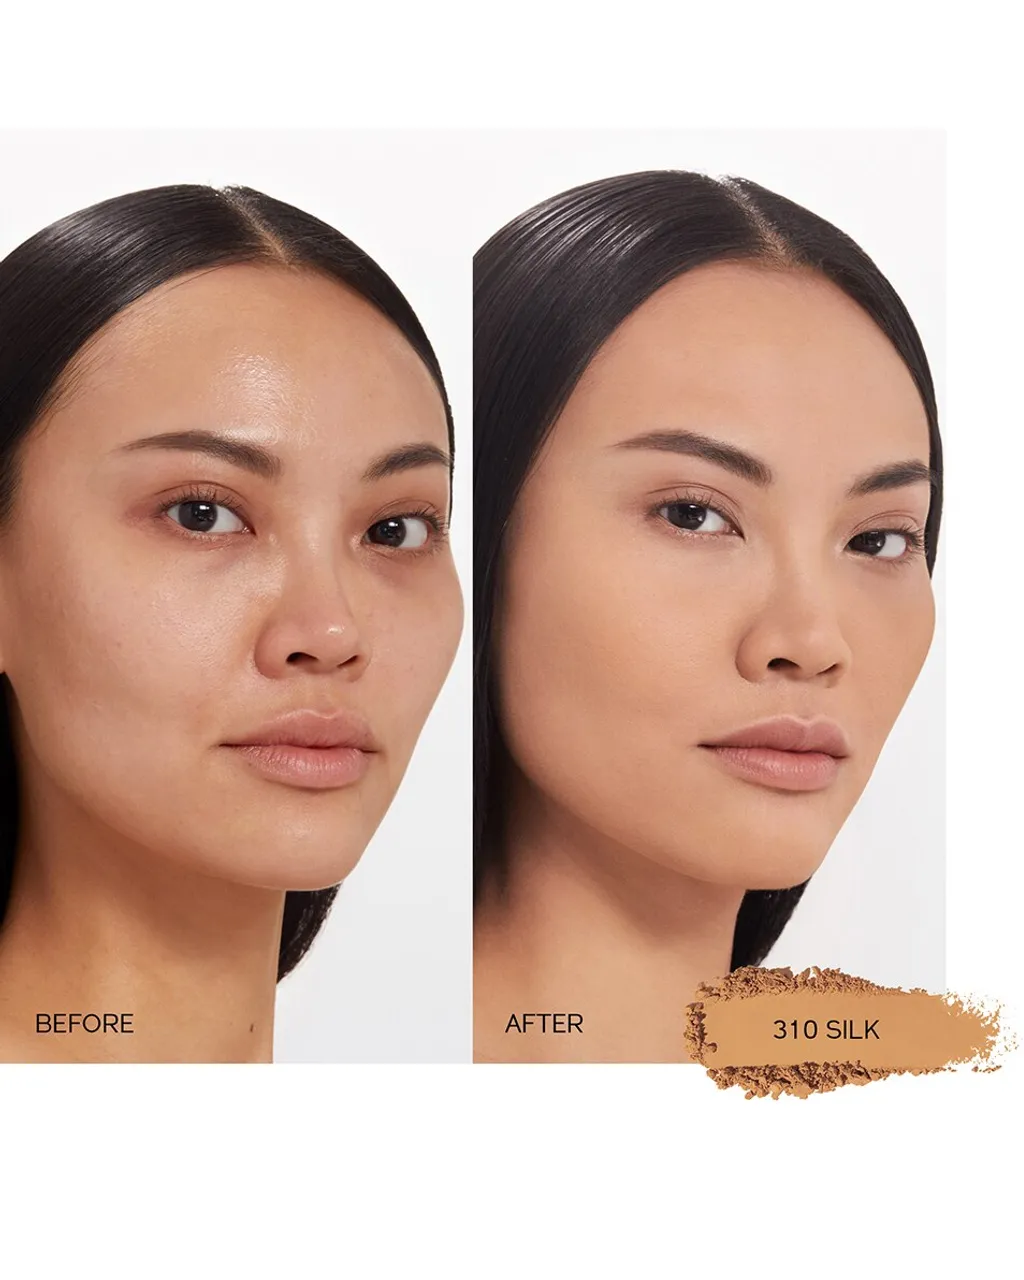 Shiseido Synchro Skin SELF-REFRESHING CUSTOM FINISH POWDER FOUNDATION